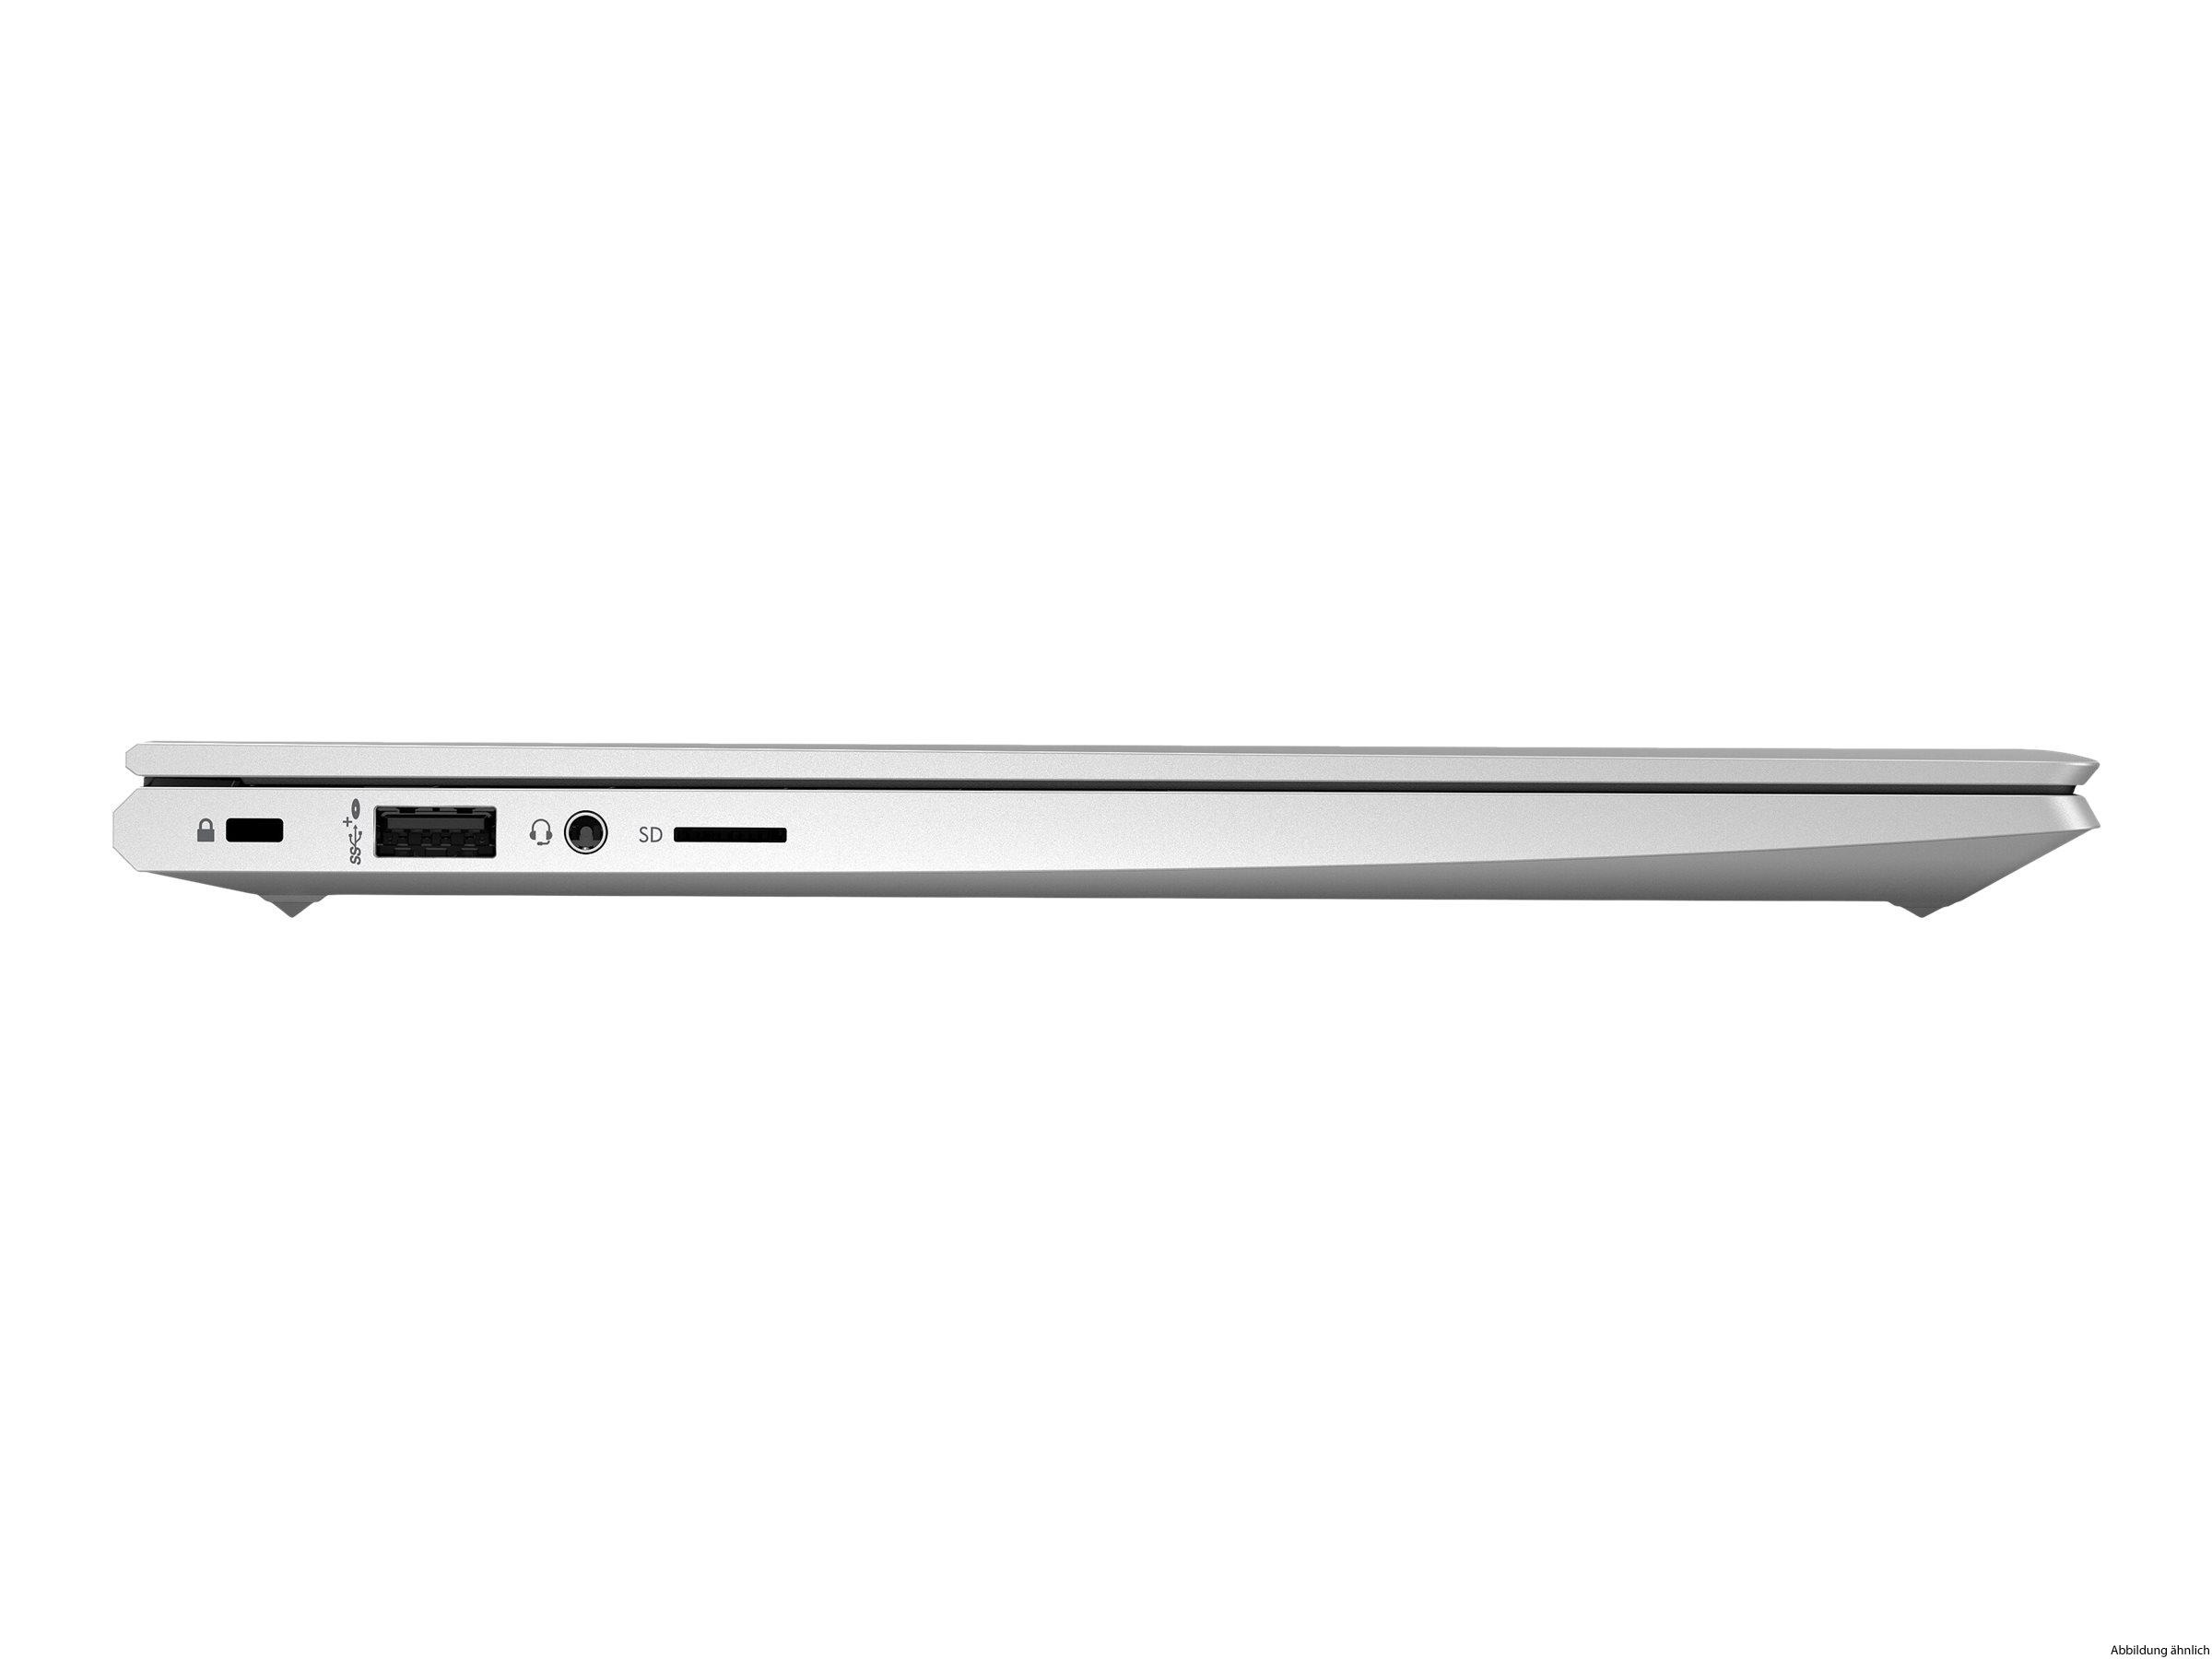 HP ProBook 430 G8 i7-1165G7 16GB 512GB M.2 13.3" 